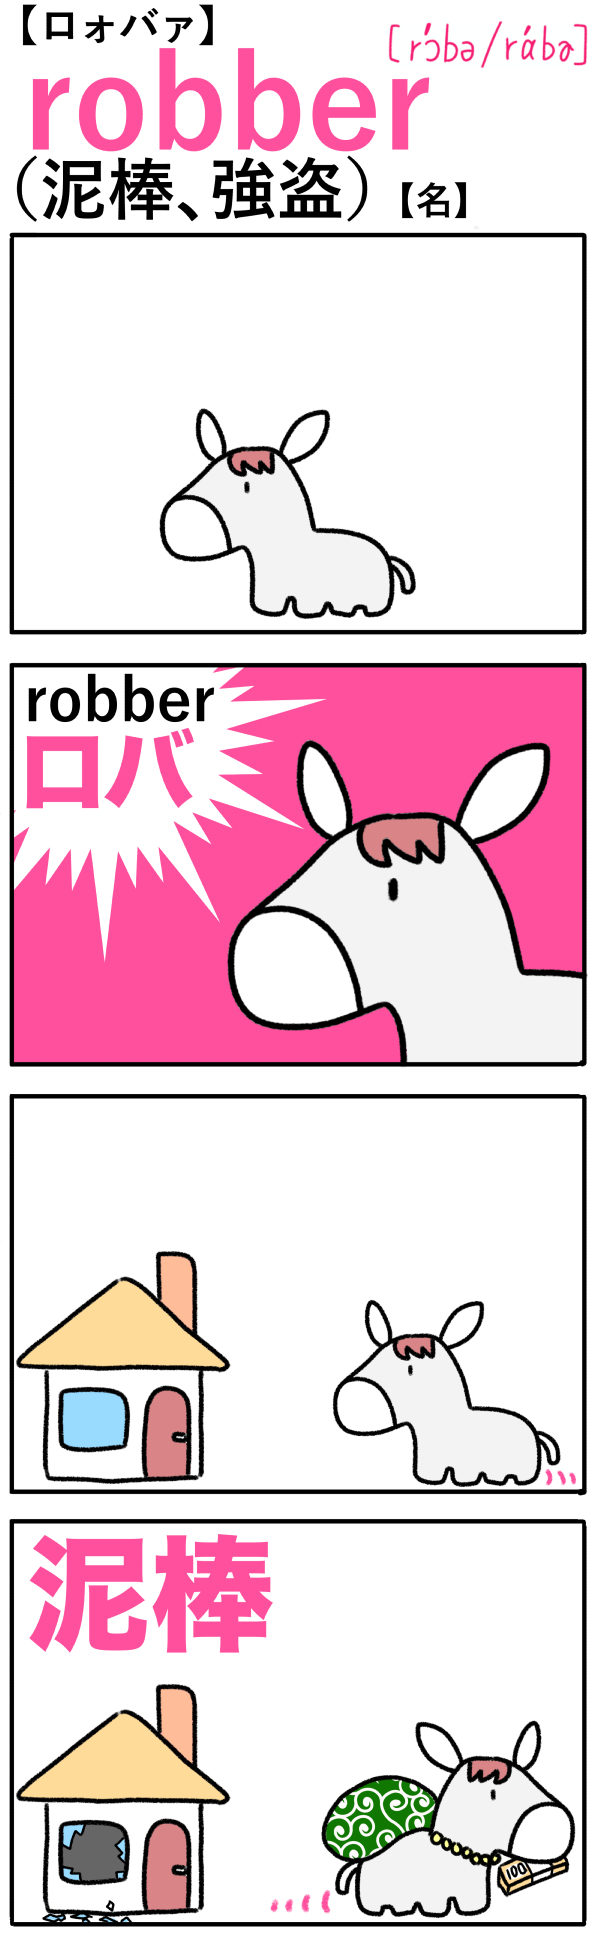 robber（泥棒、強盗）の語呂合わせ英単語